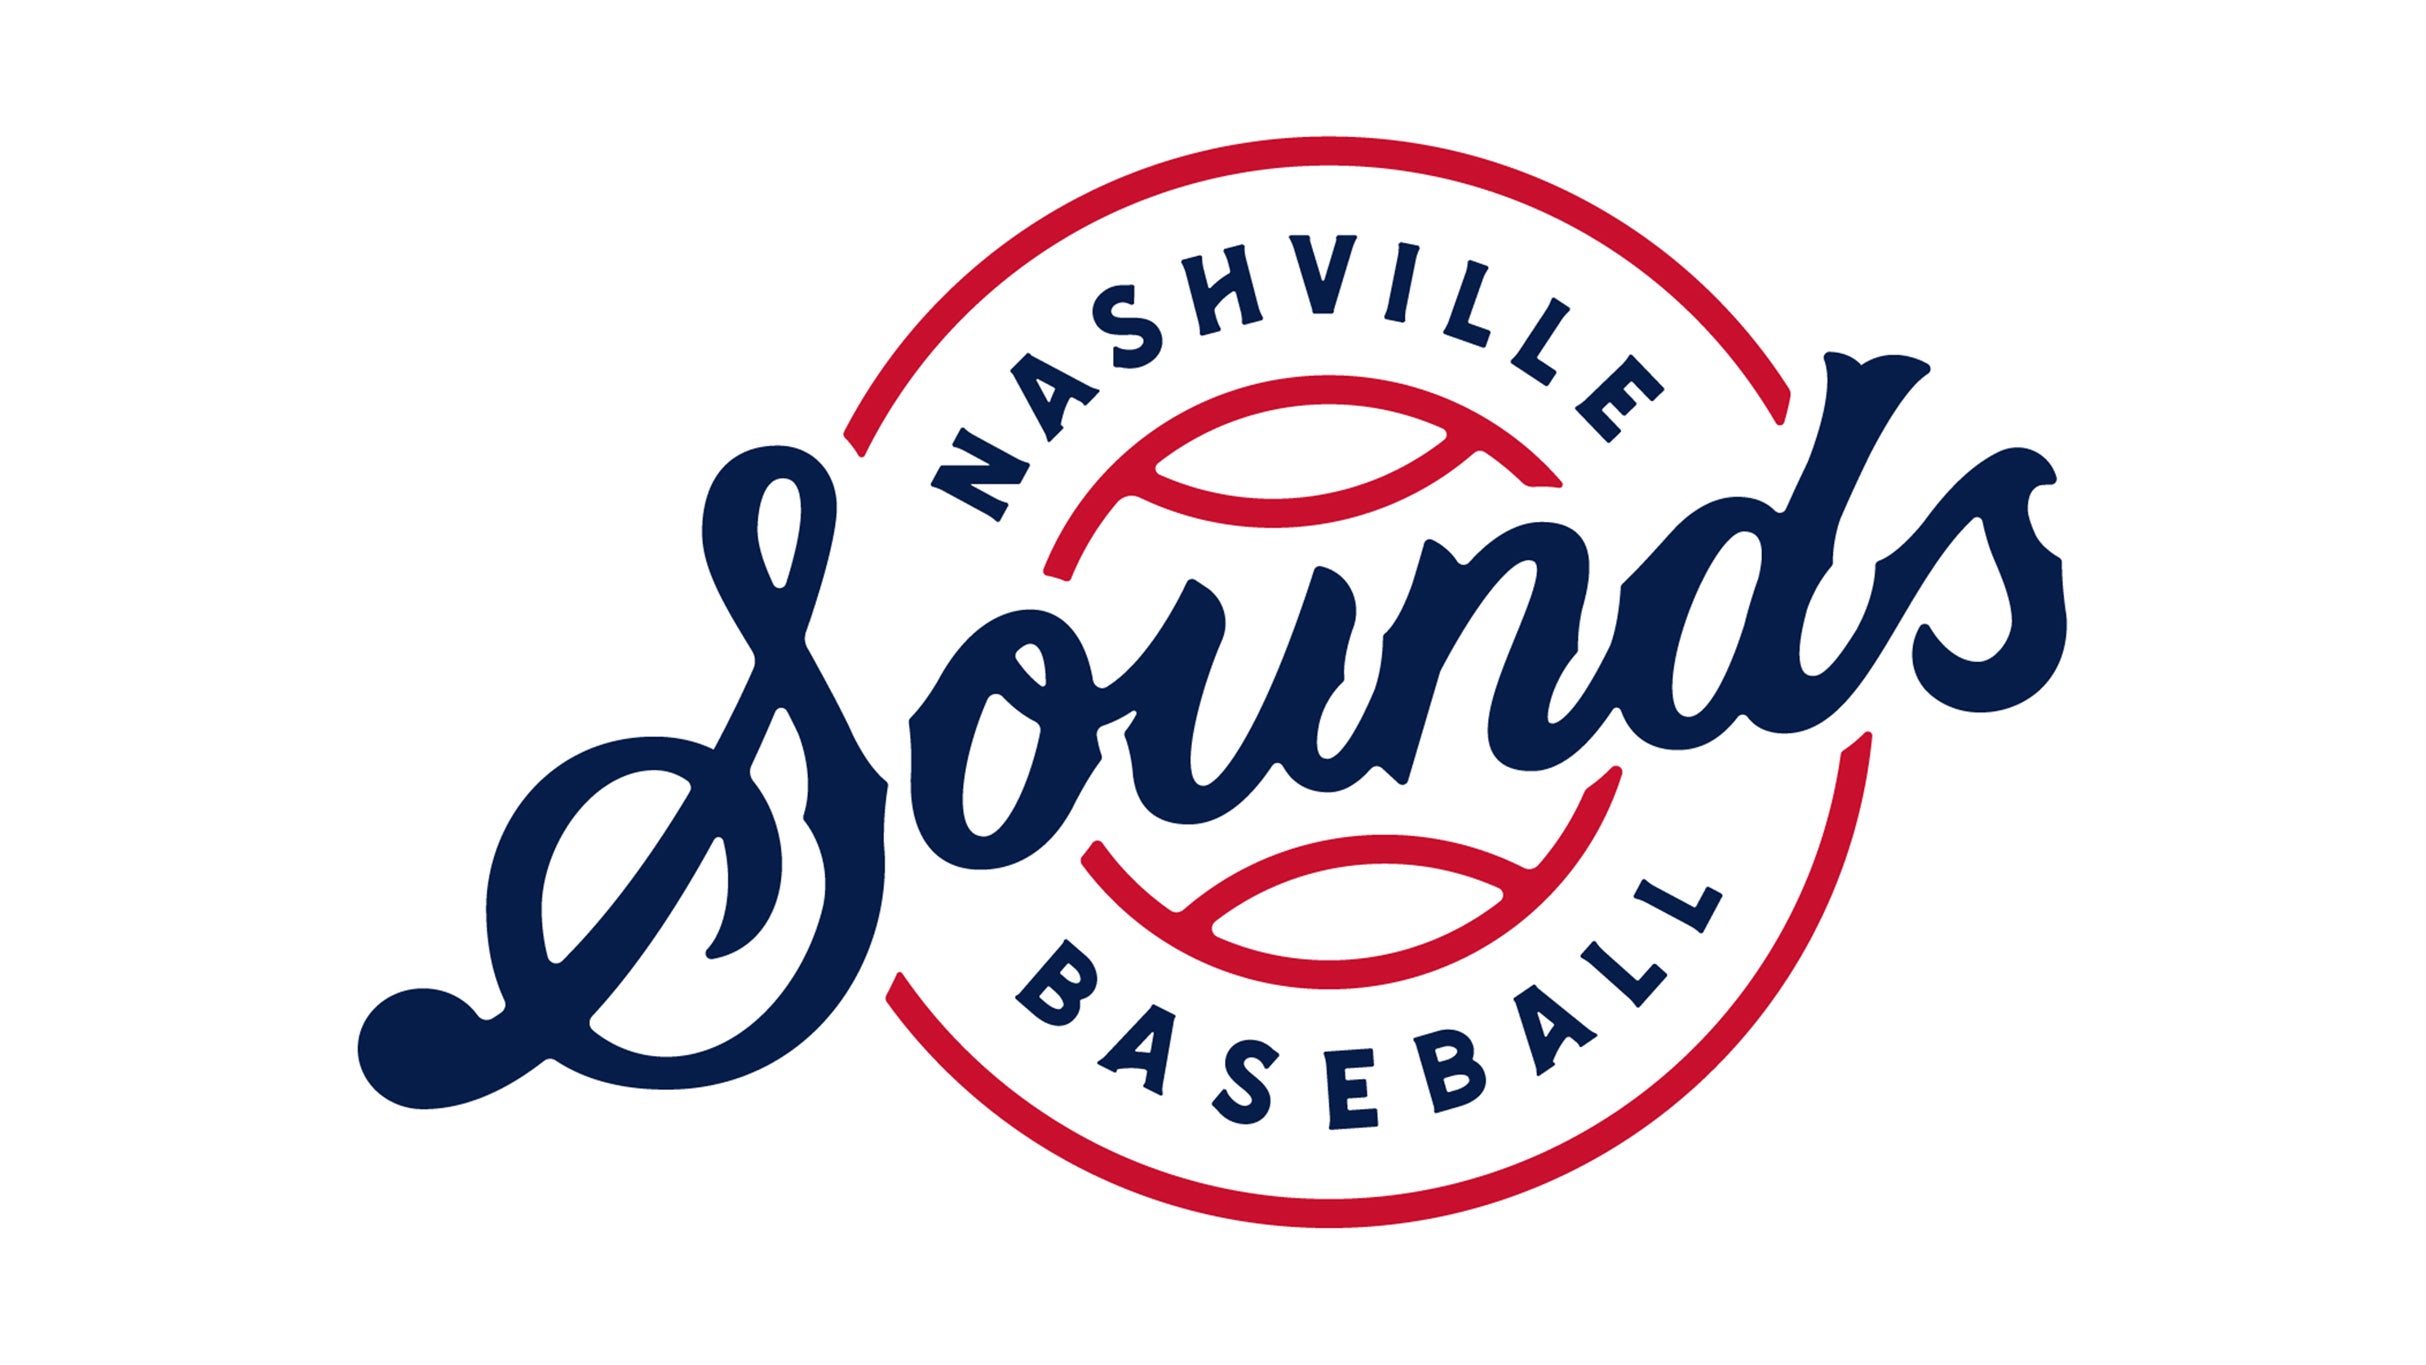 Nashville Sounds vs. Iowa Cubs at First Horizon Park